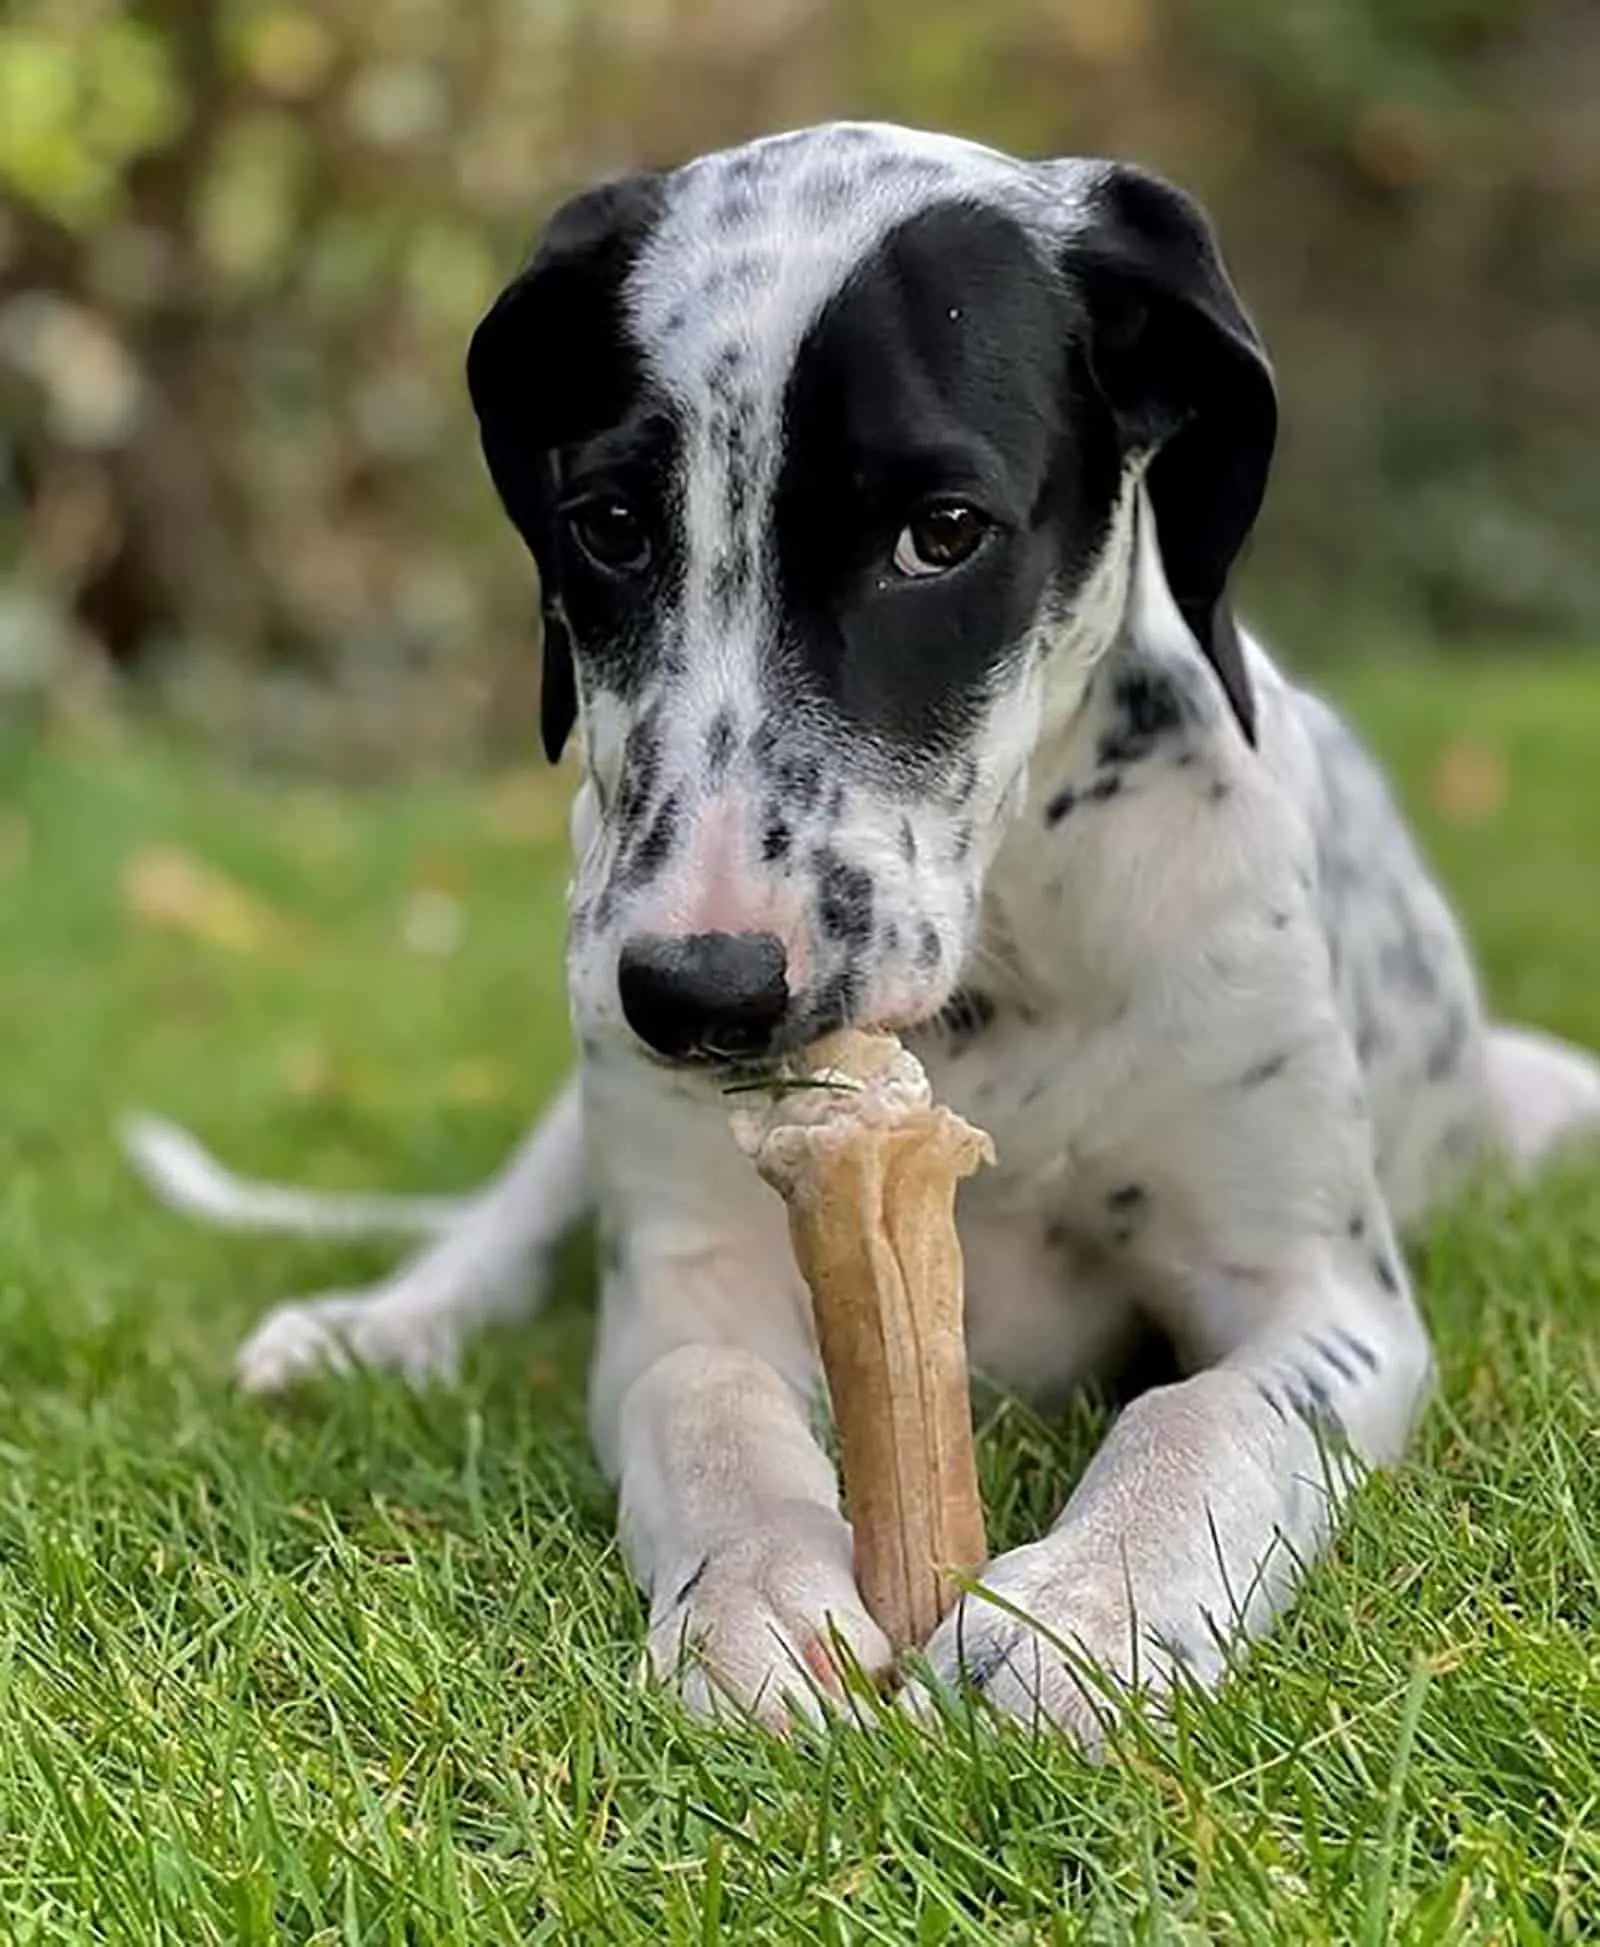 dalmador puppy eating a treat